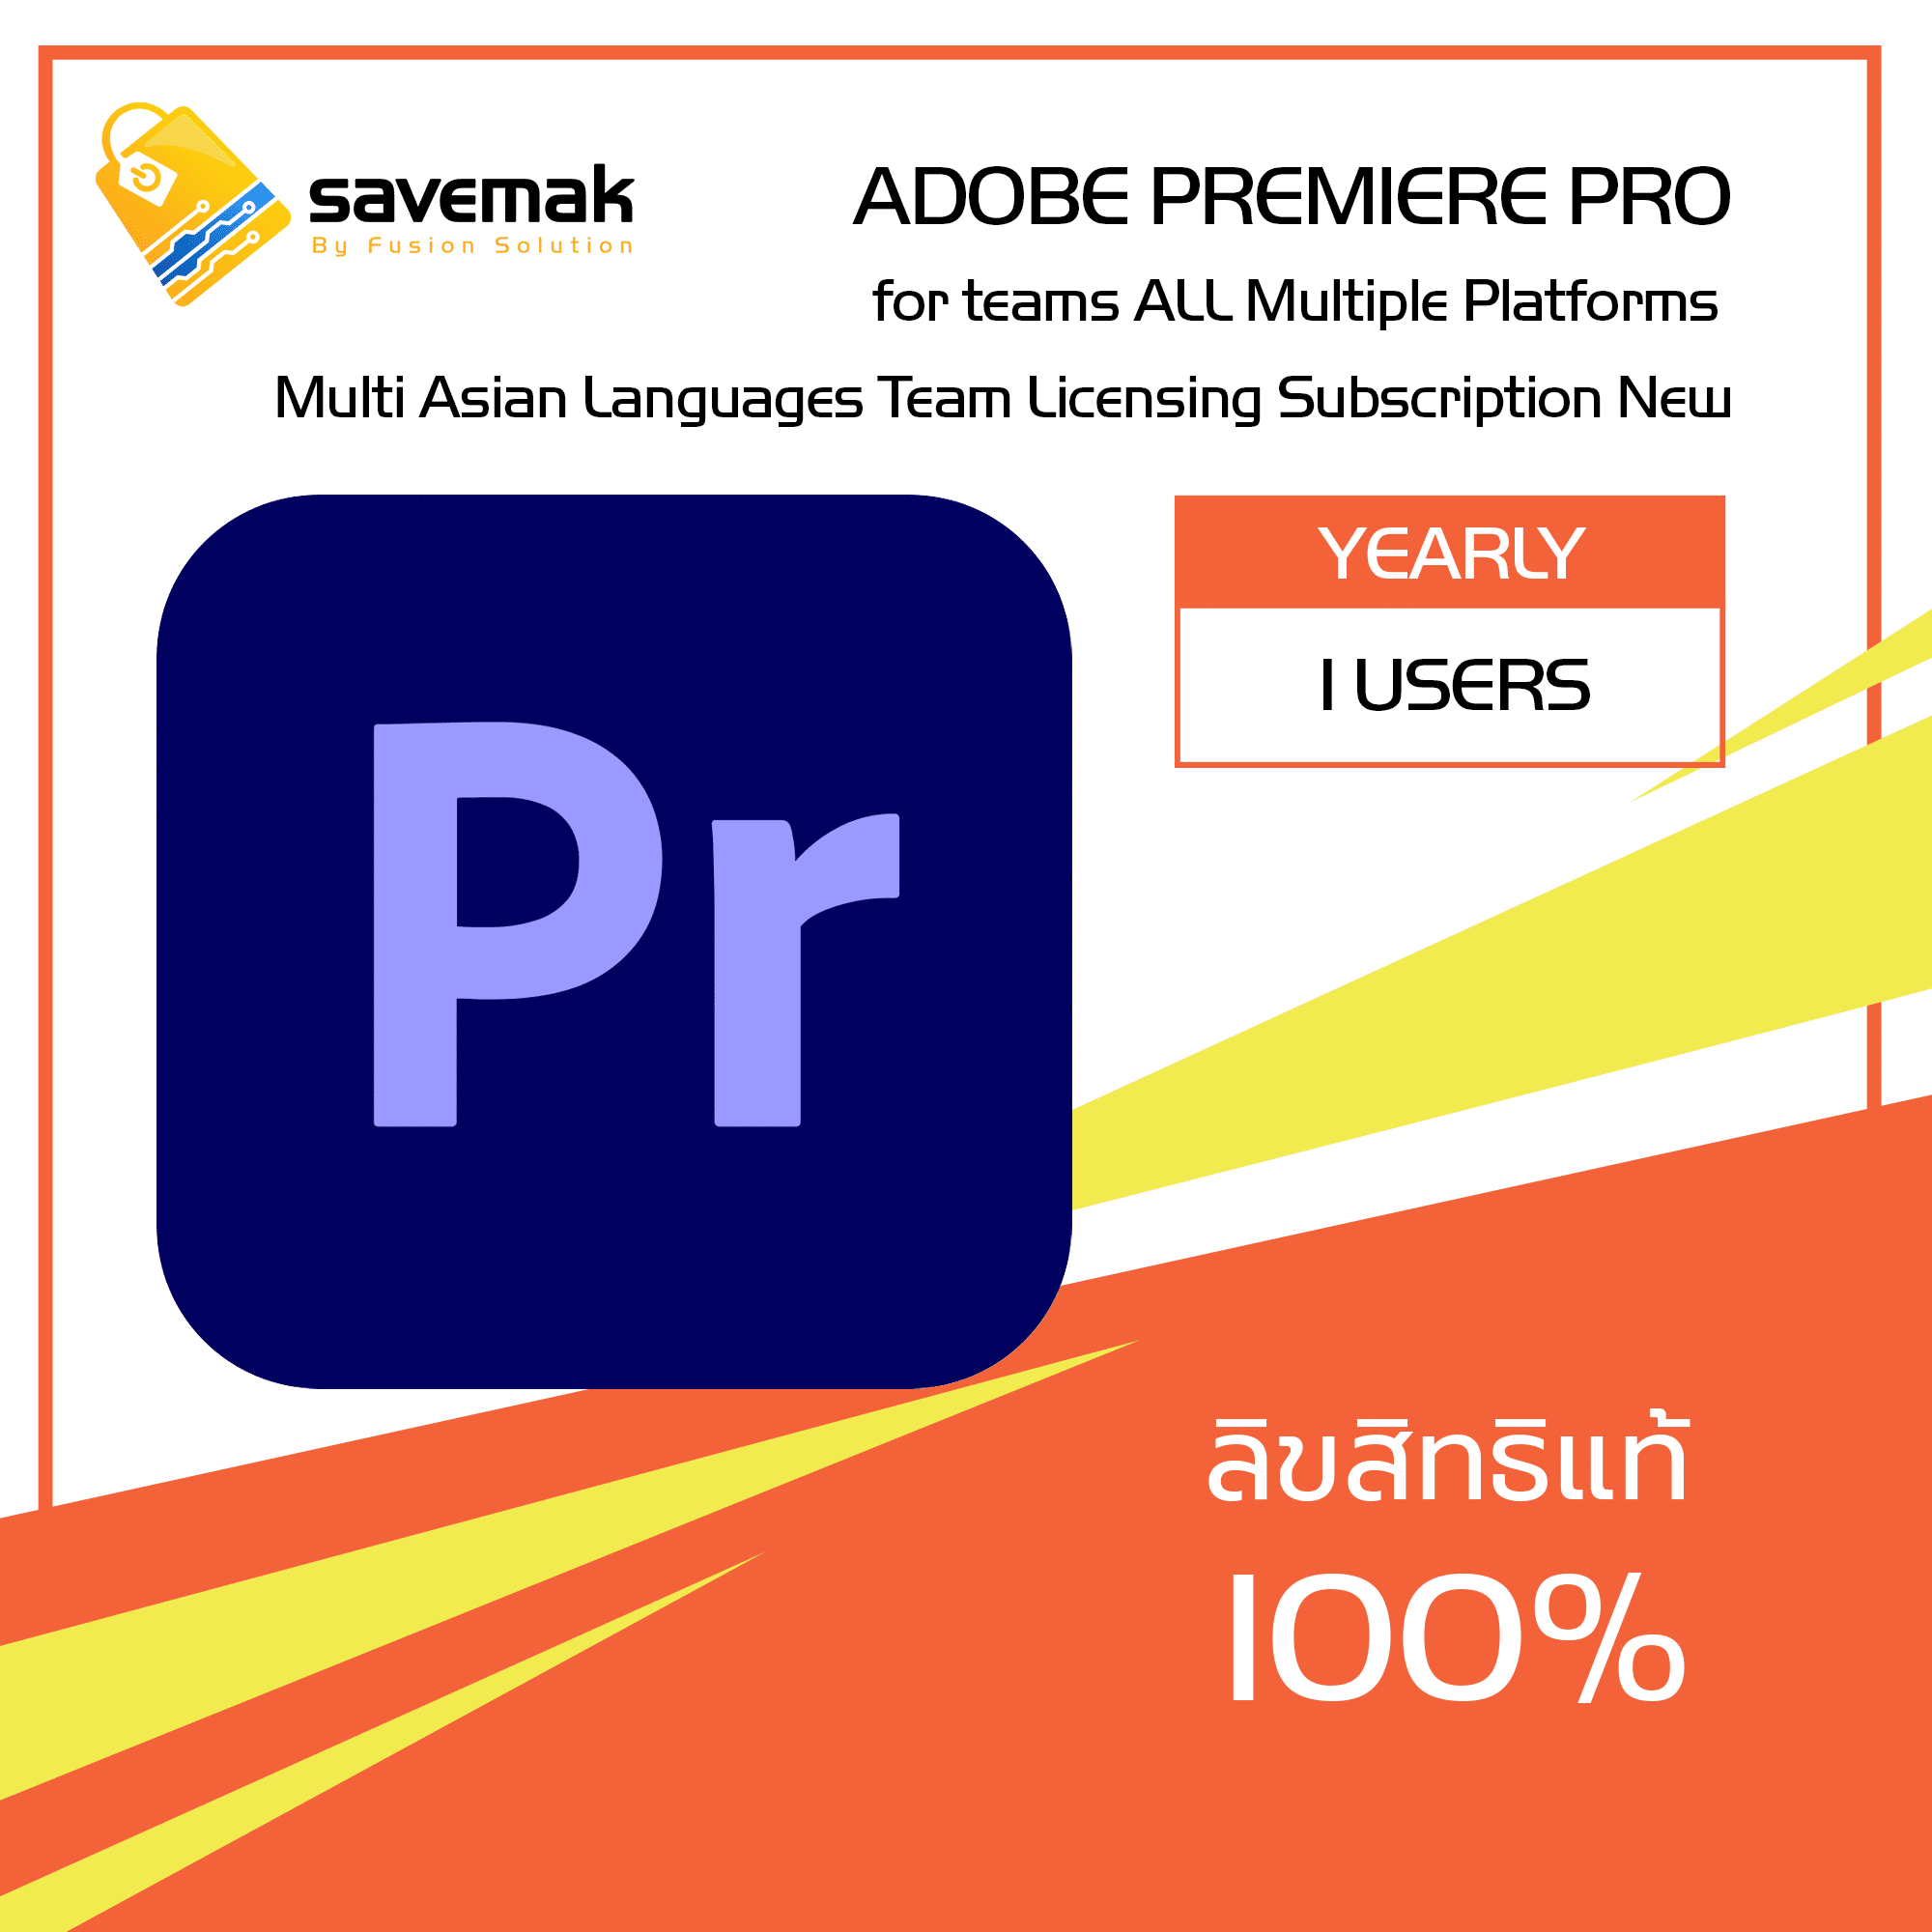 adobe premiere pro price lifetime in india